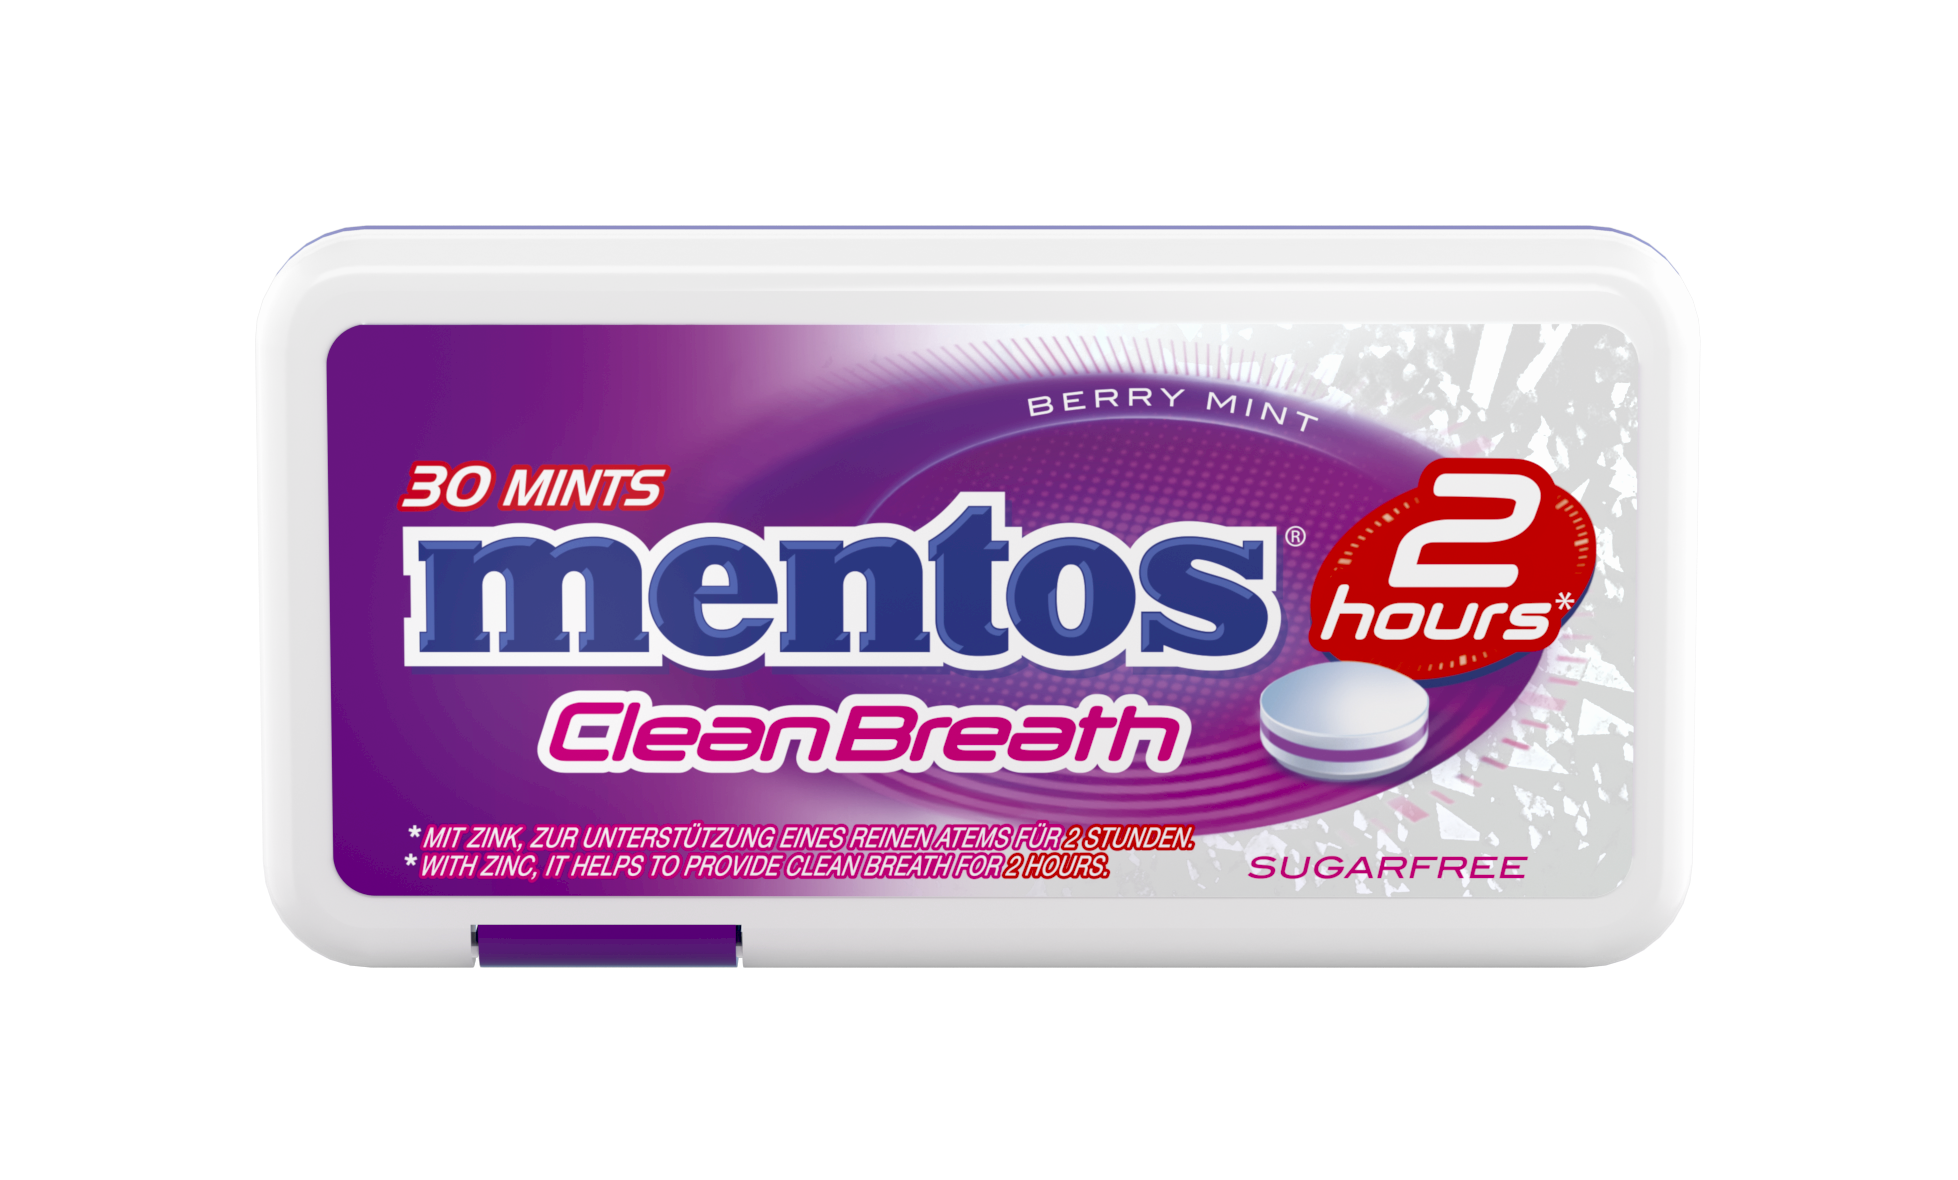 Mentos Clean Breath Berry Mint